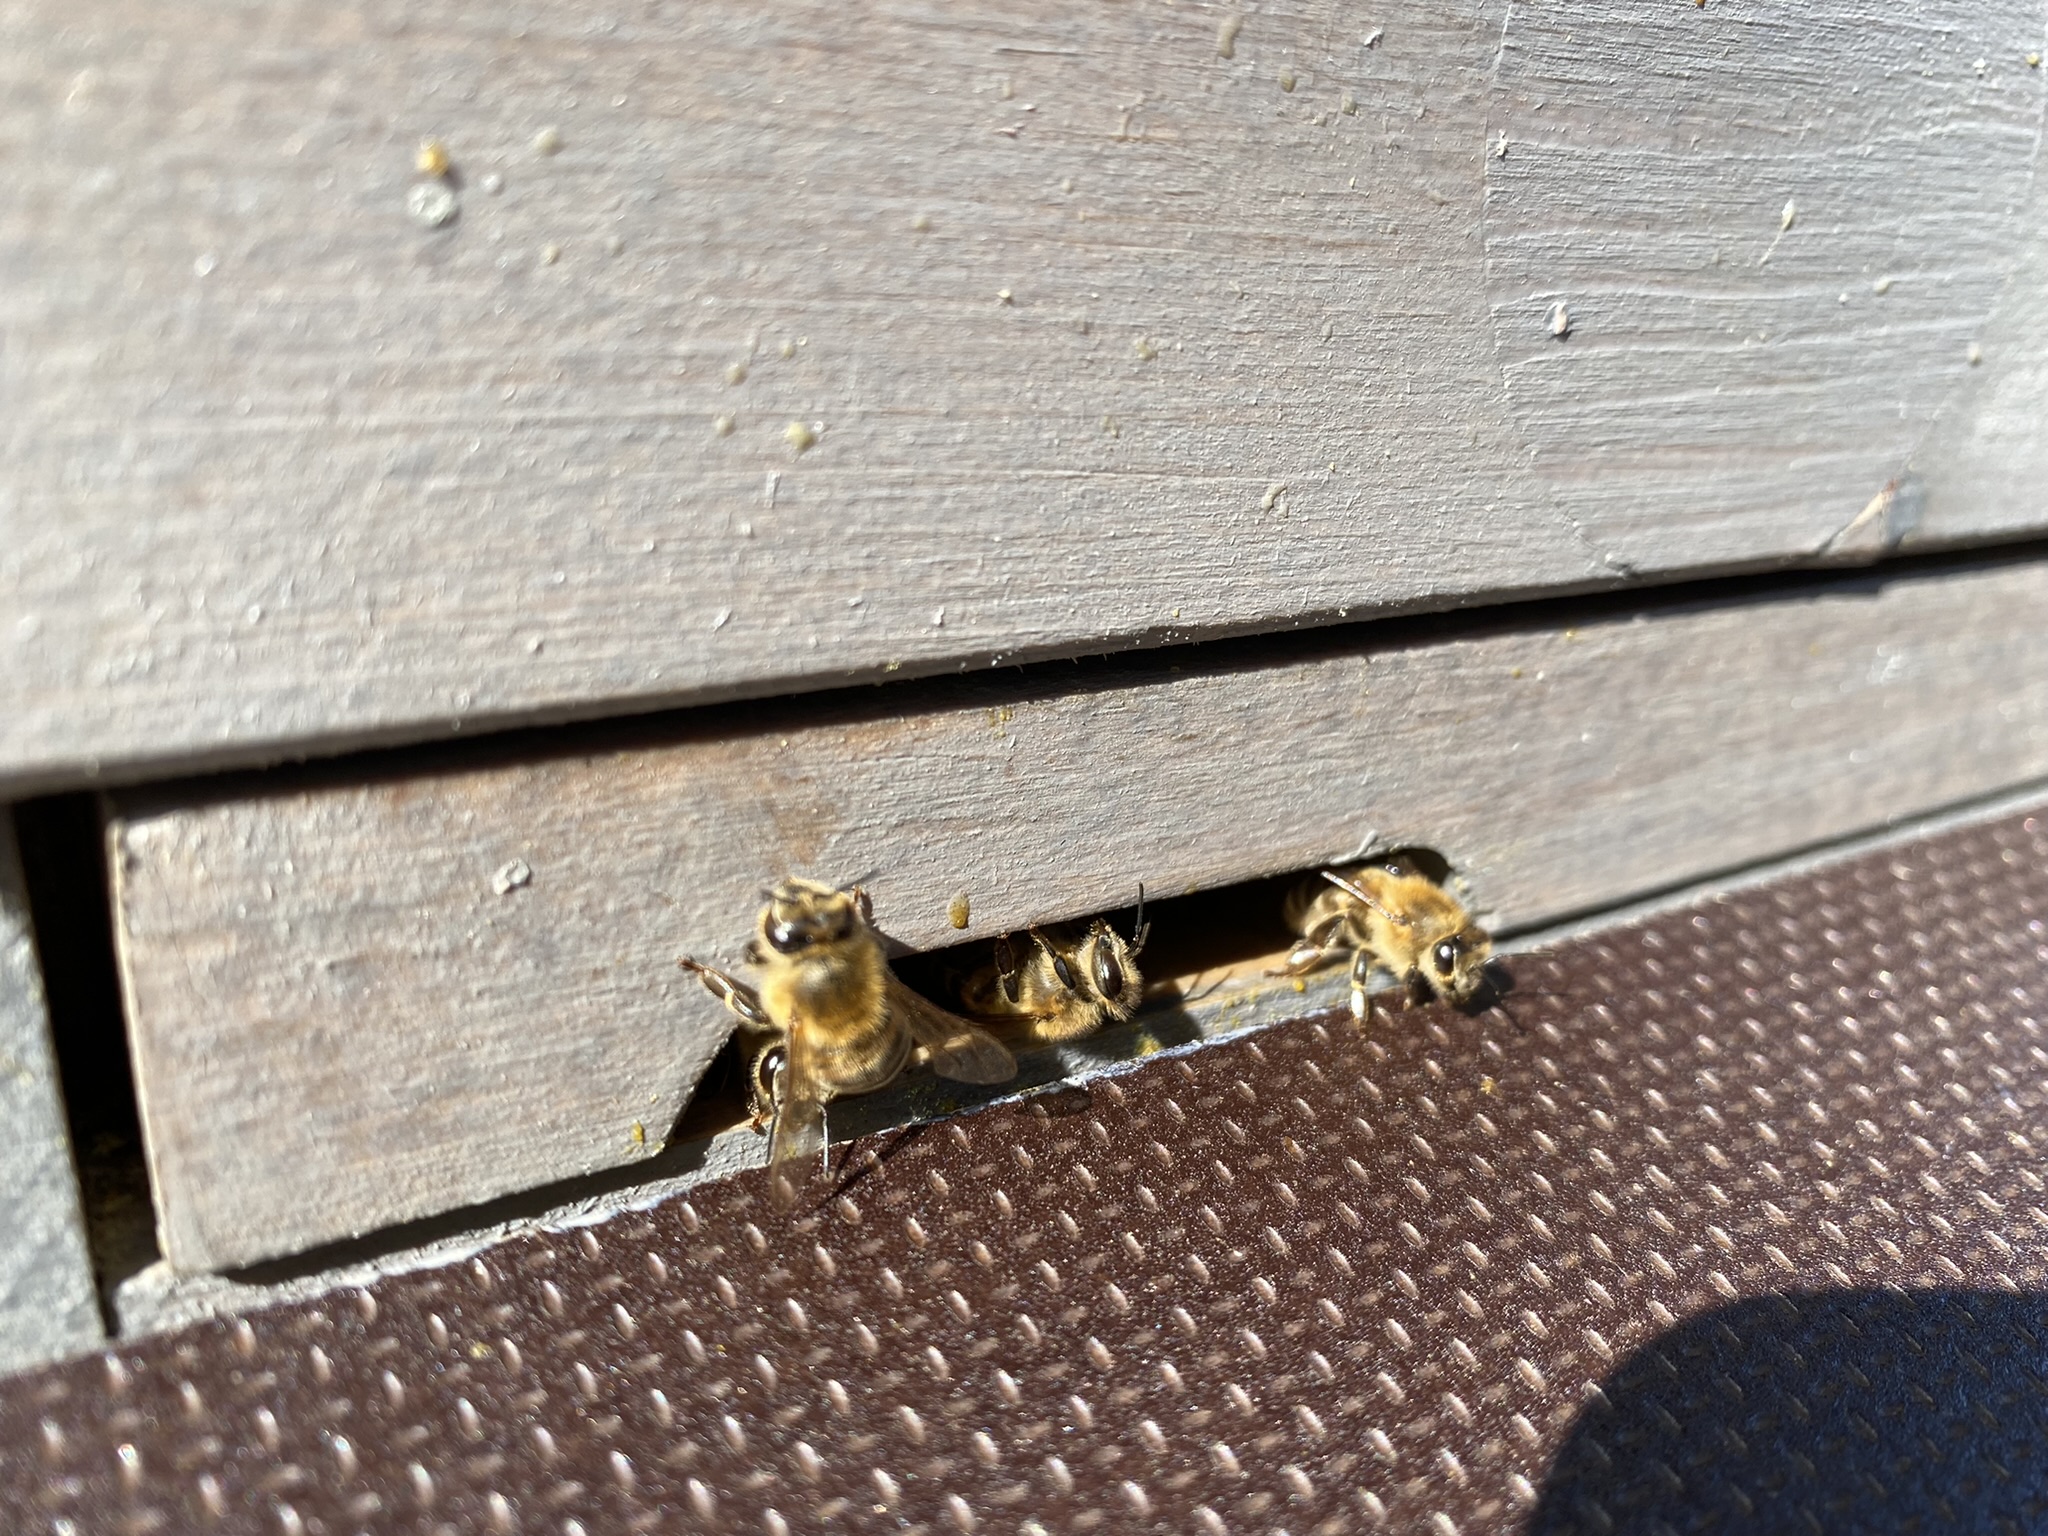 Bienen am Flugloch